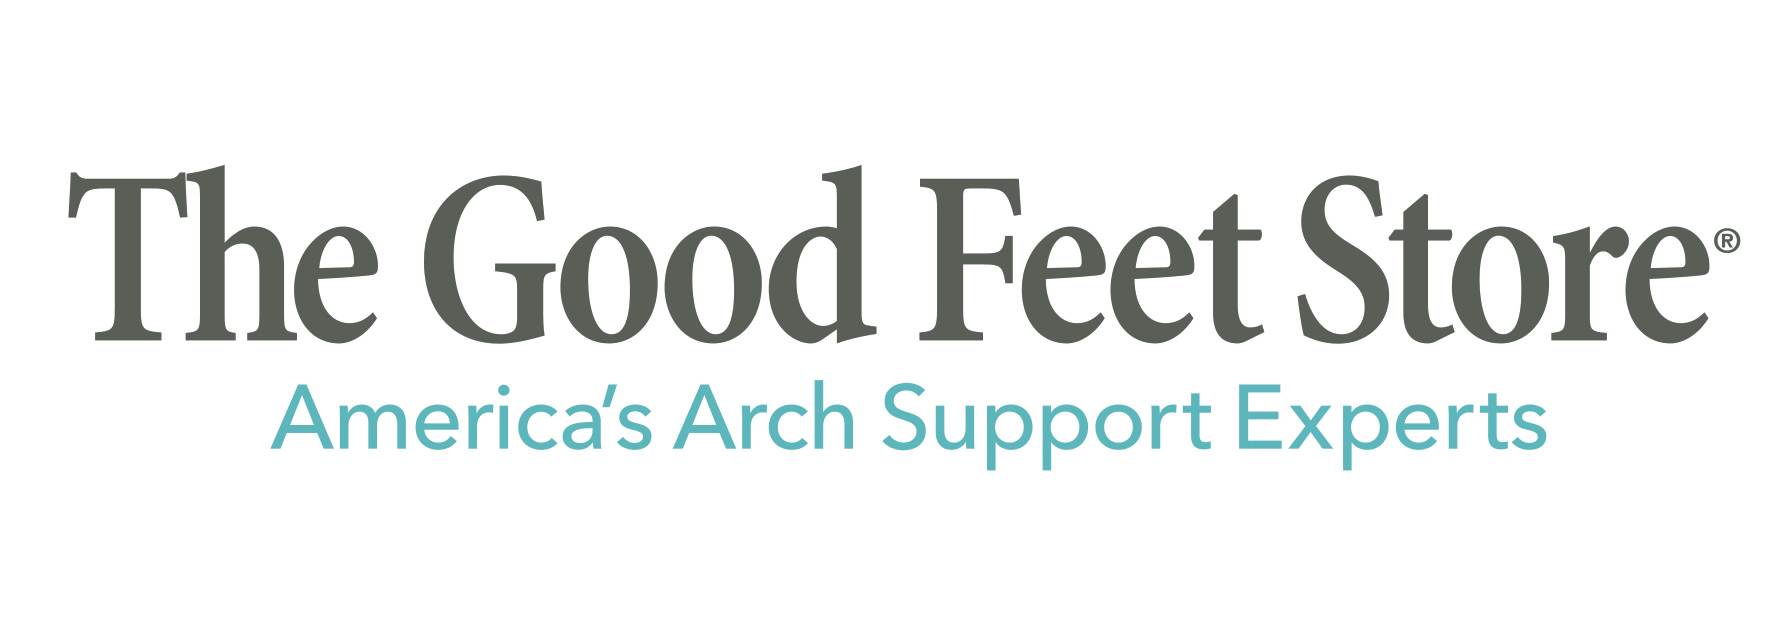 The Good Feet Store logo